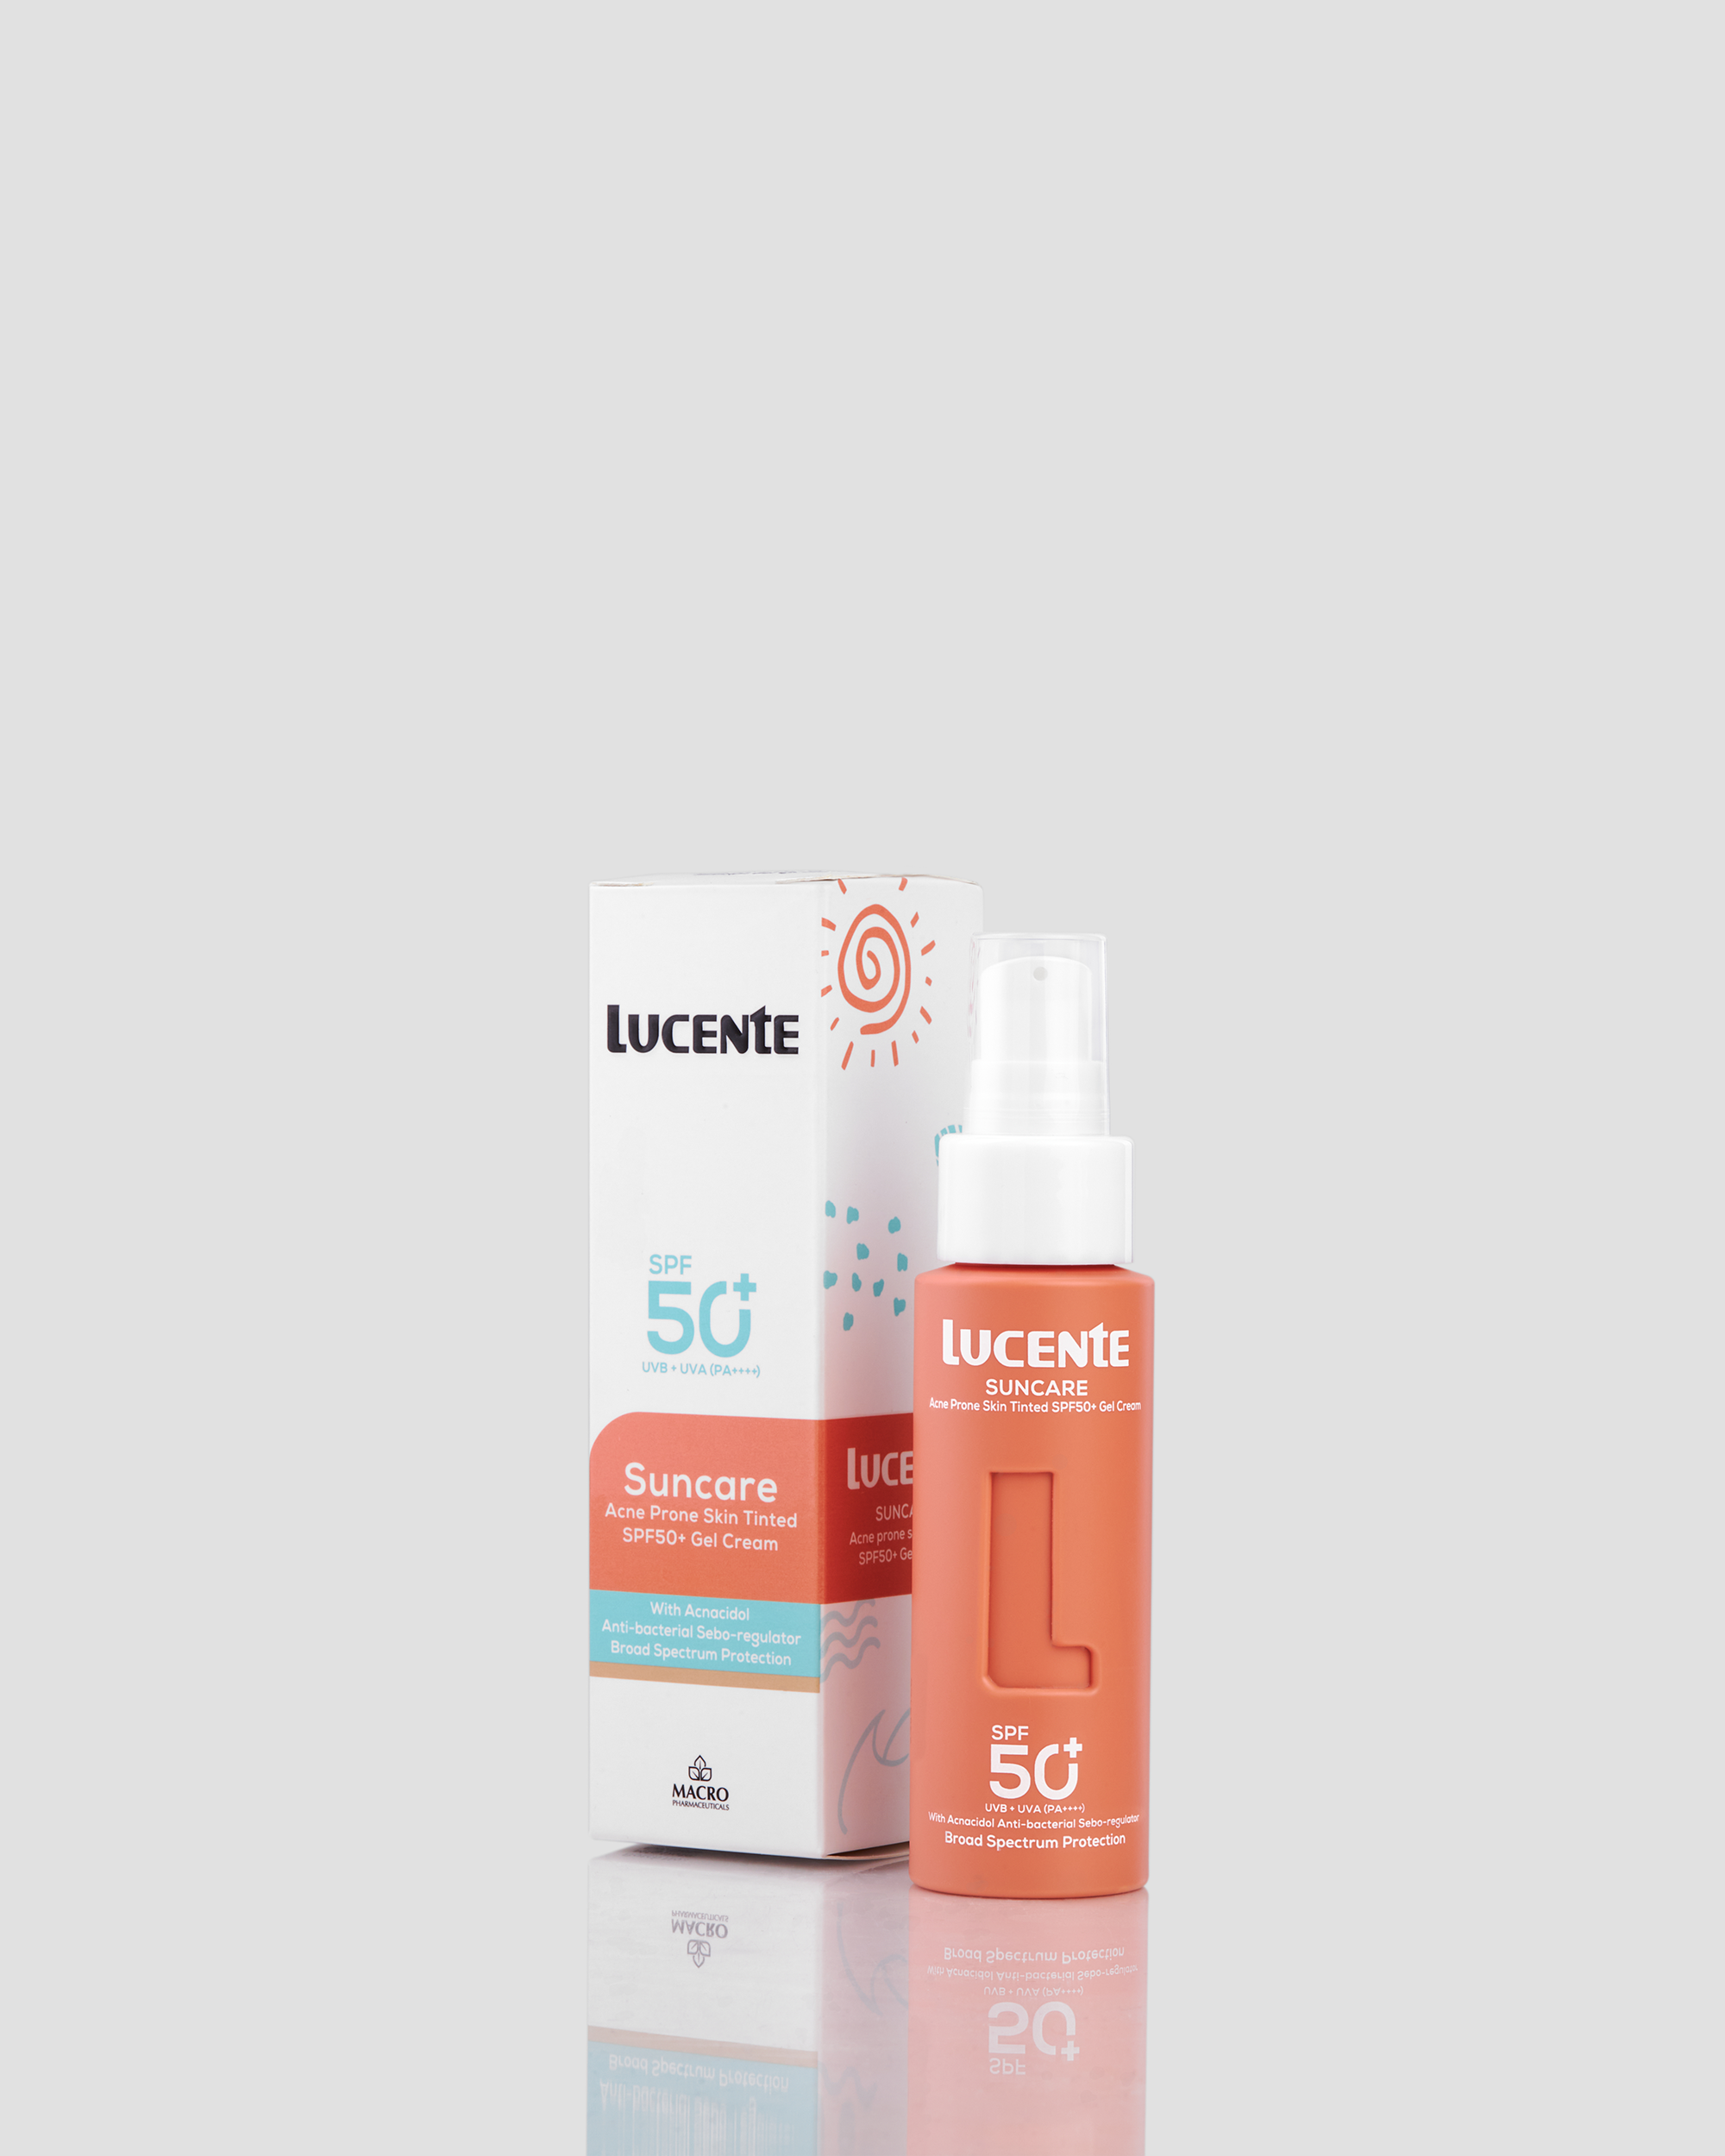 Lucente Suncare -Acne Prone Skin Tinted SPF 50+ -50Ml